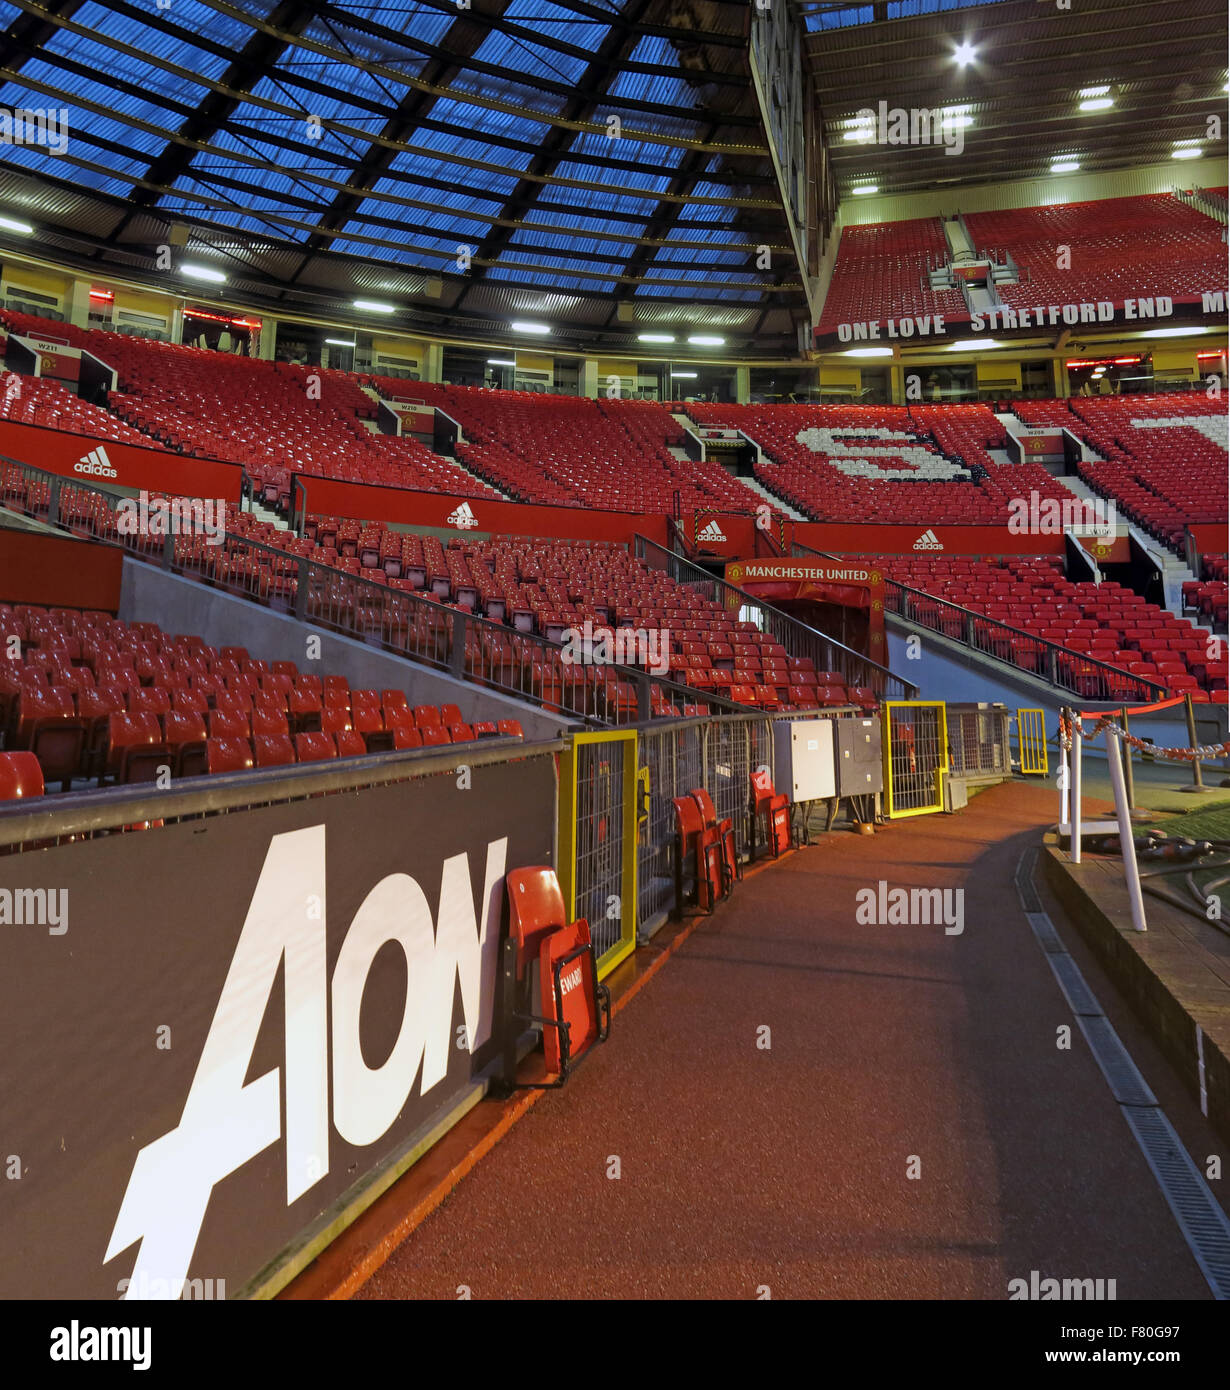 Old Trafford, sponsor AON und Stretford End, Manchester United, Manchester, England, UK Stockfoto